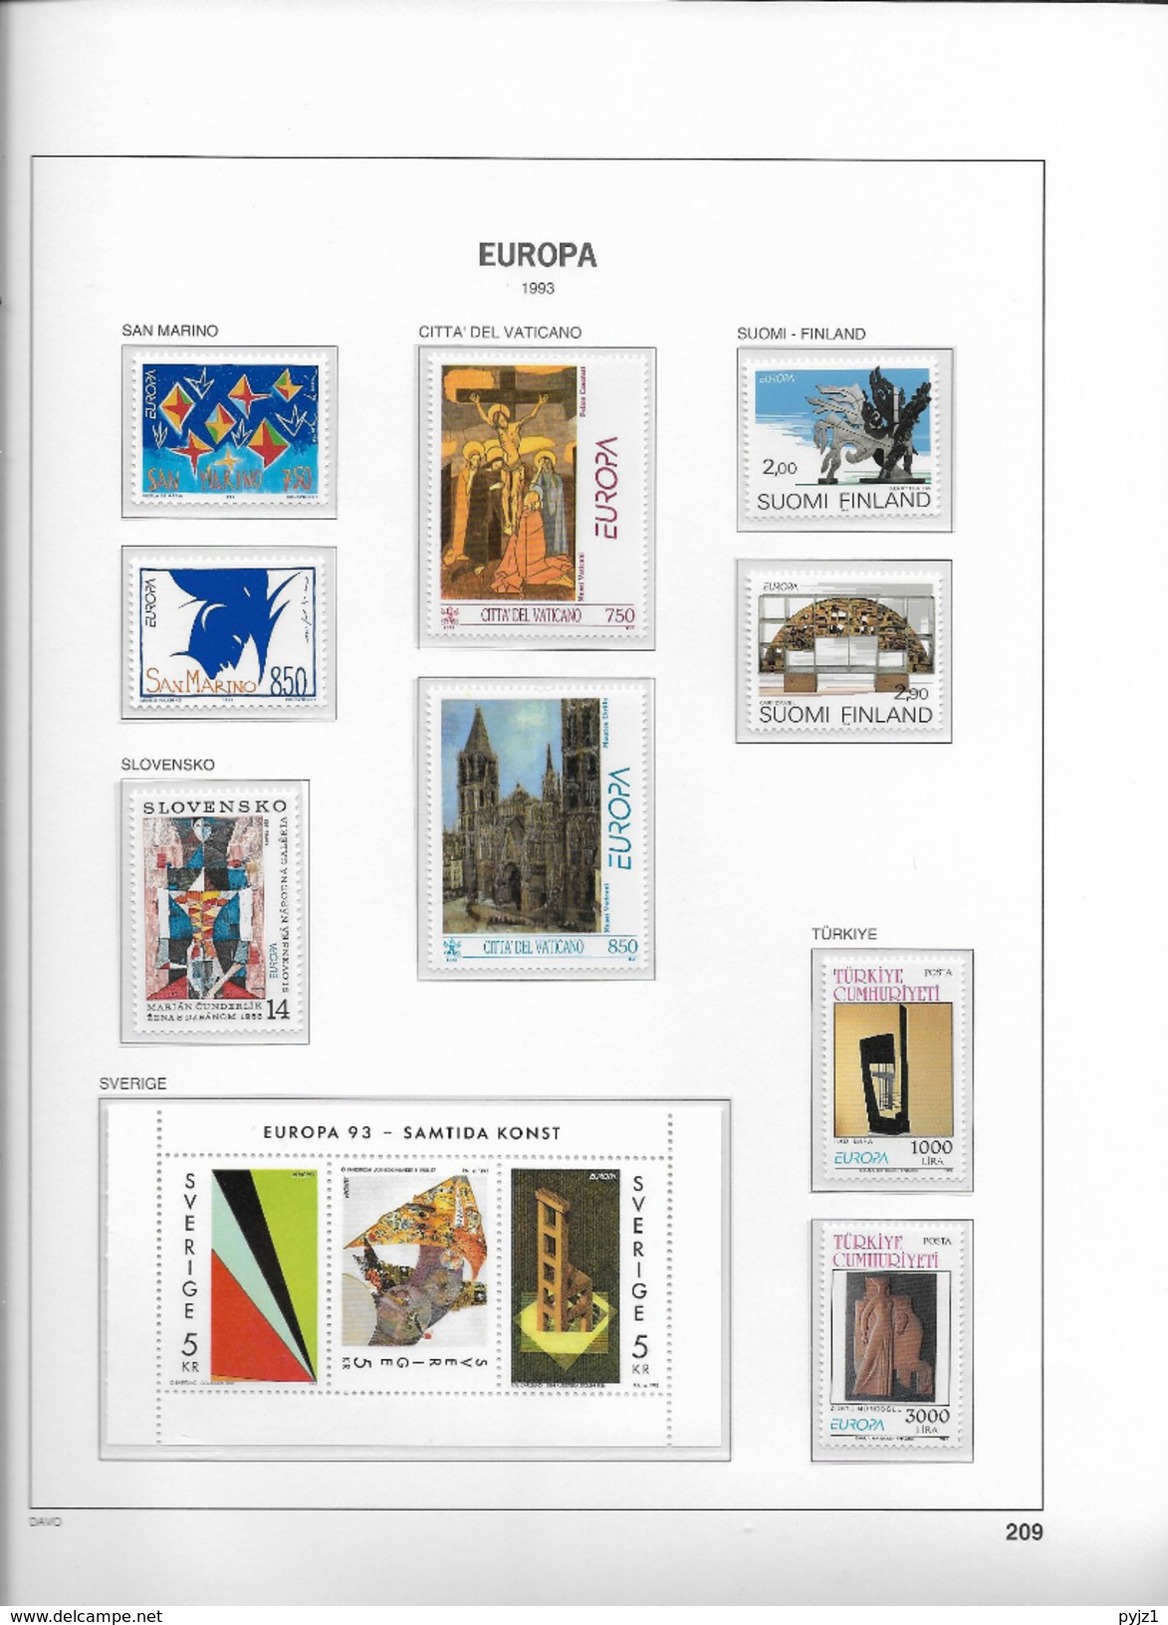 1993 MNH CEPT year collection according to DAVO ALbum, (13 scans) postfris**